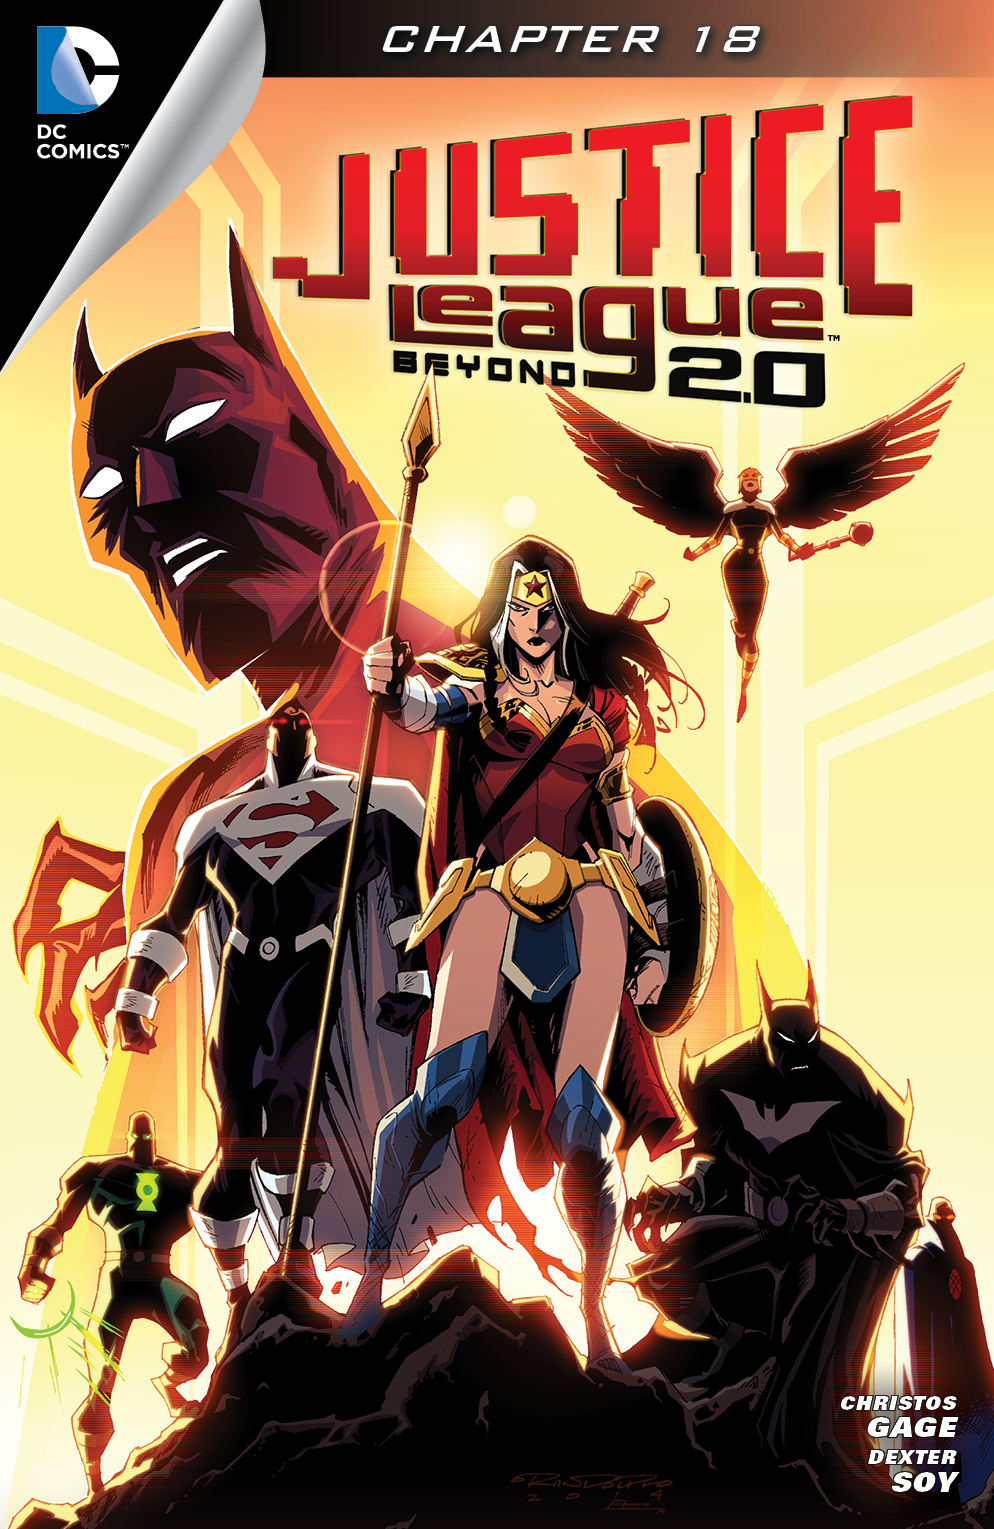 Justice League Beyond 2.0 #18 preview images